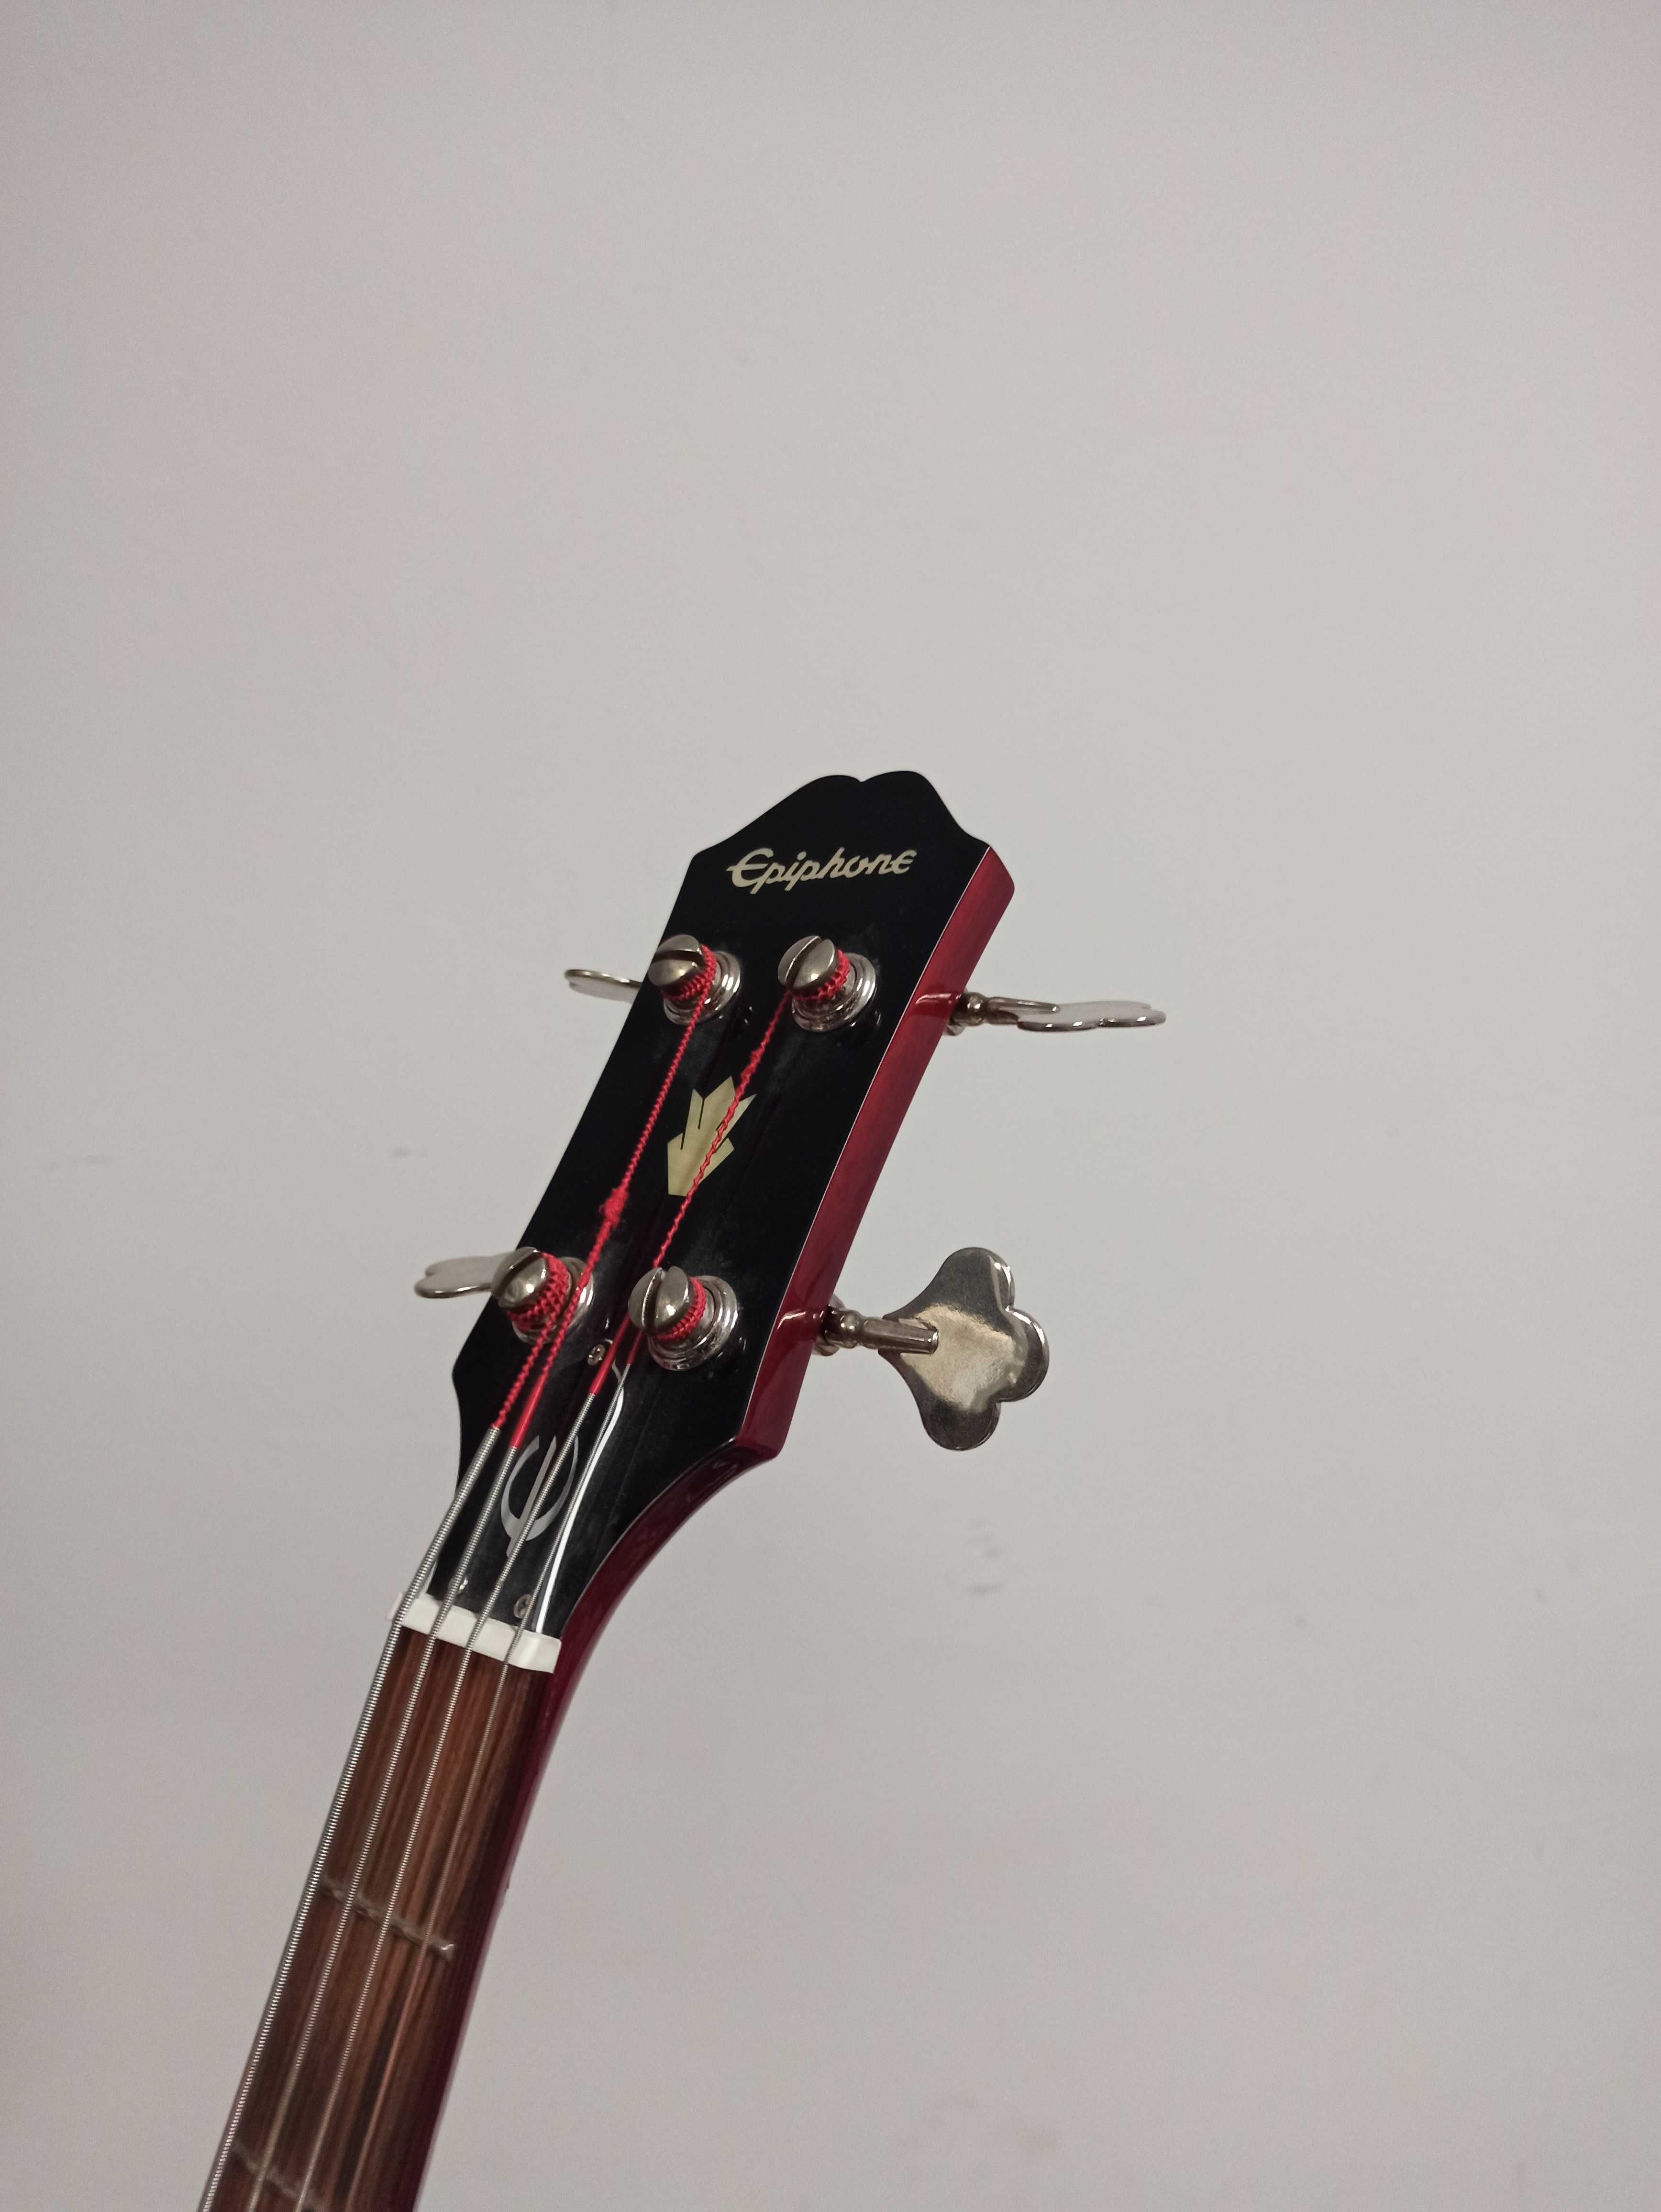 Epiphone EB-3 Cherry  Cherry bass guitar.